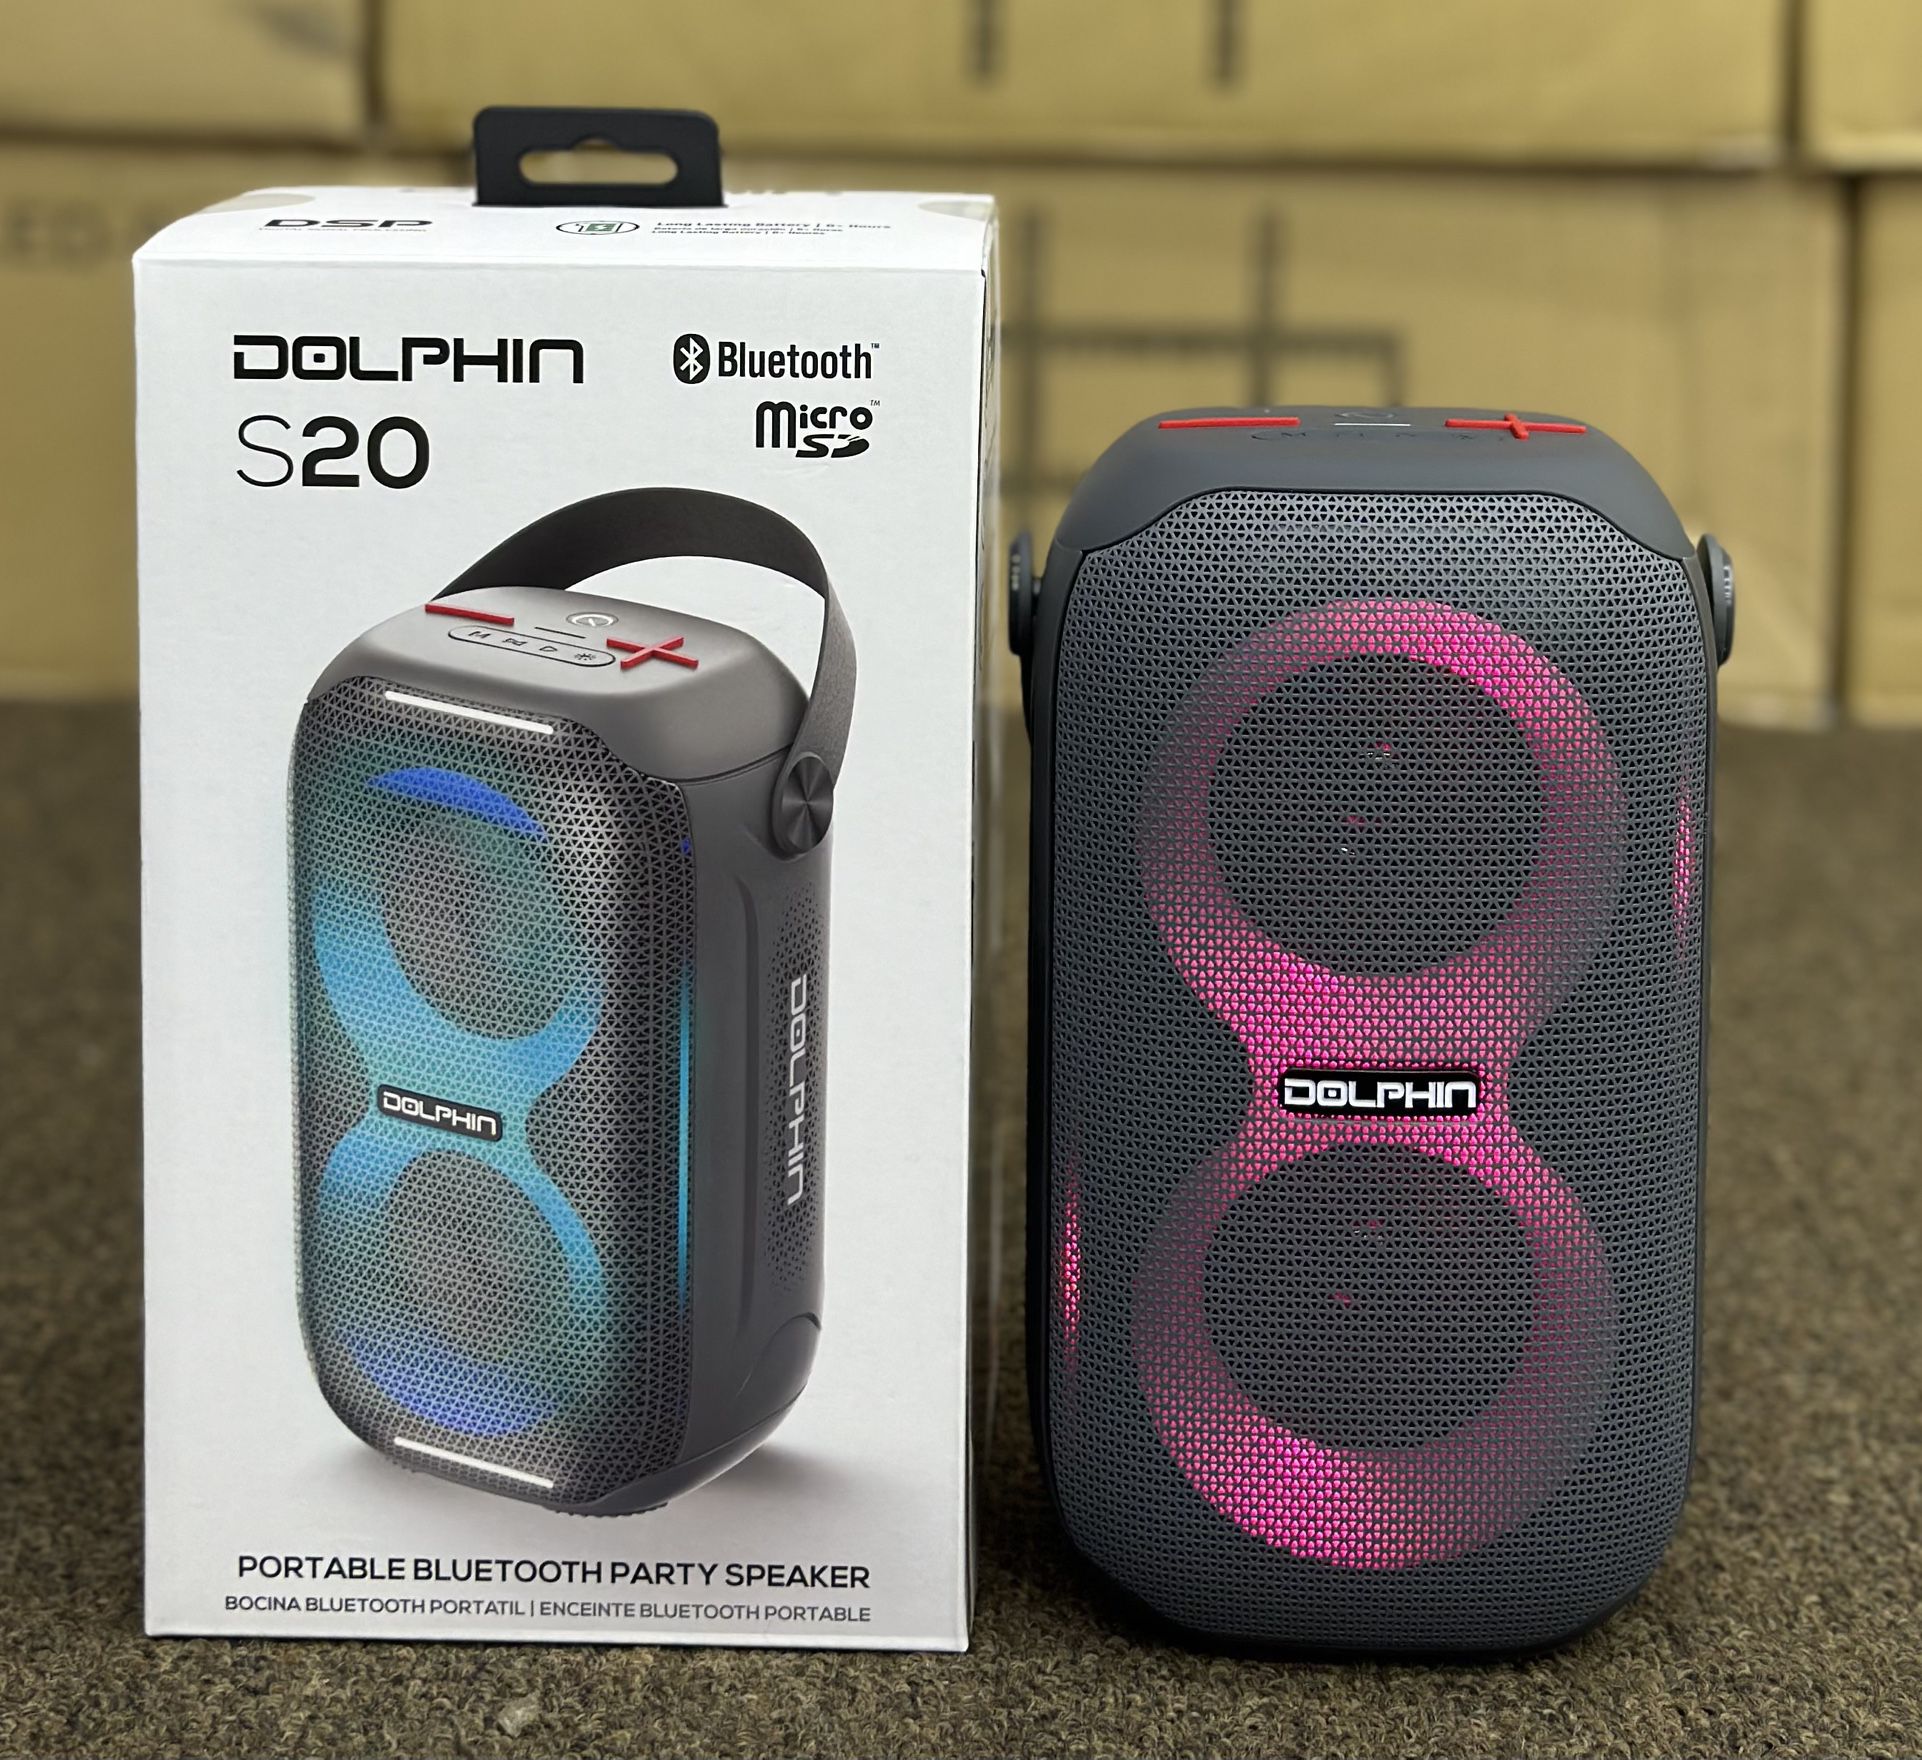  Dolphin New! Splash proof Portable Bluetooth Party Speaker